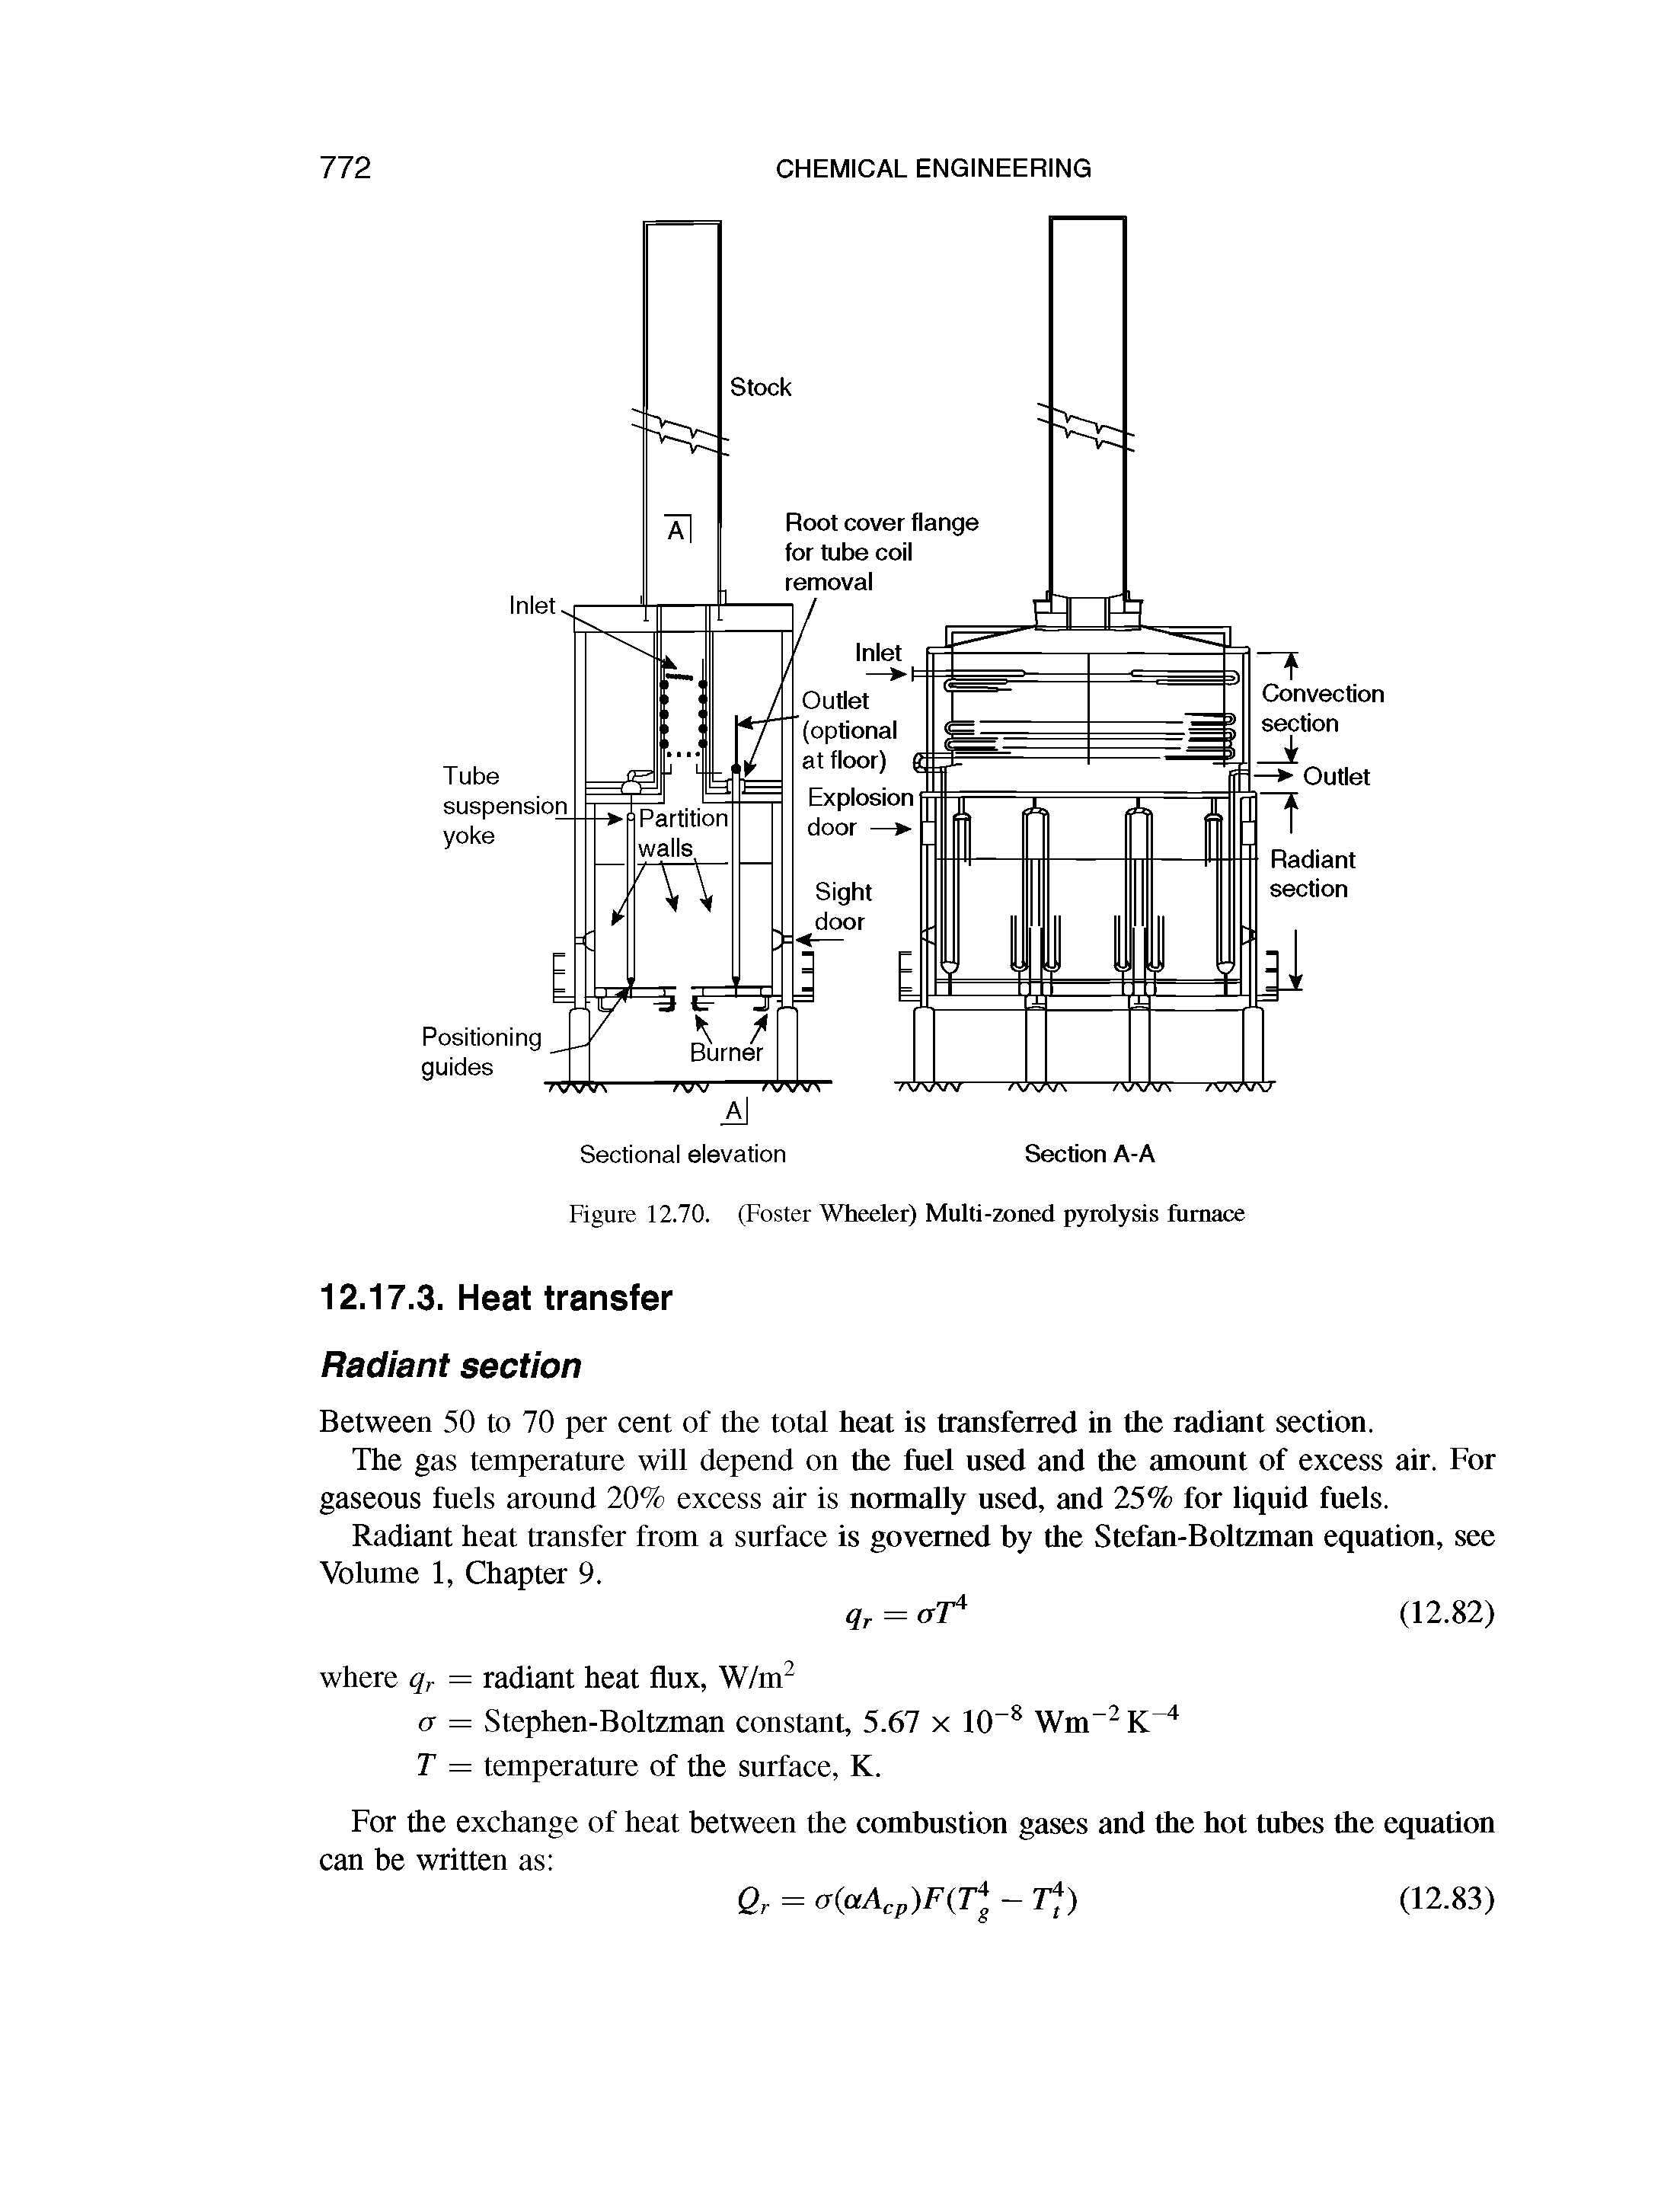 Figure 12.70. (Foster Wheeler) Multi-zoned pyrolysis furnace...